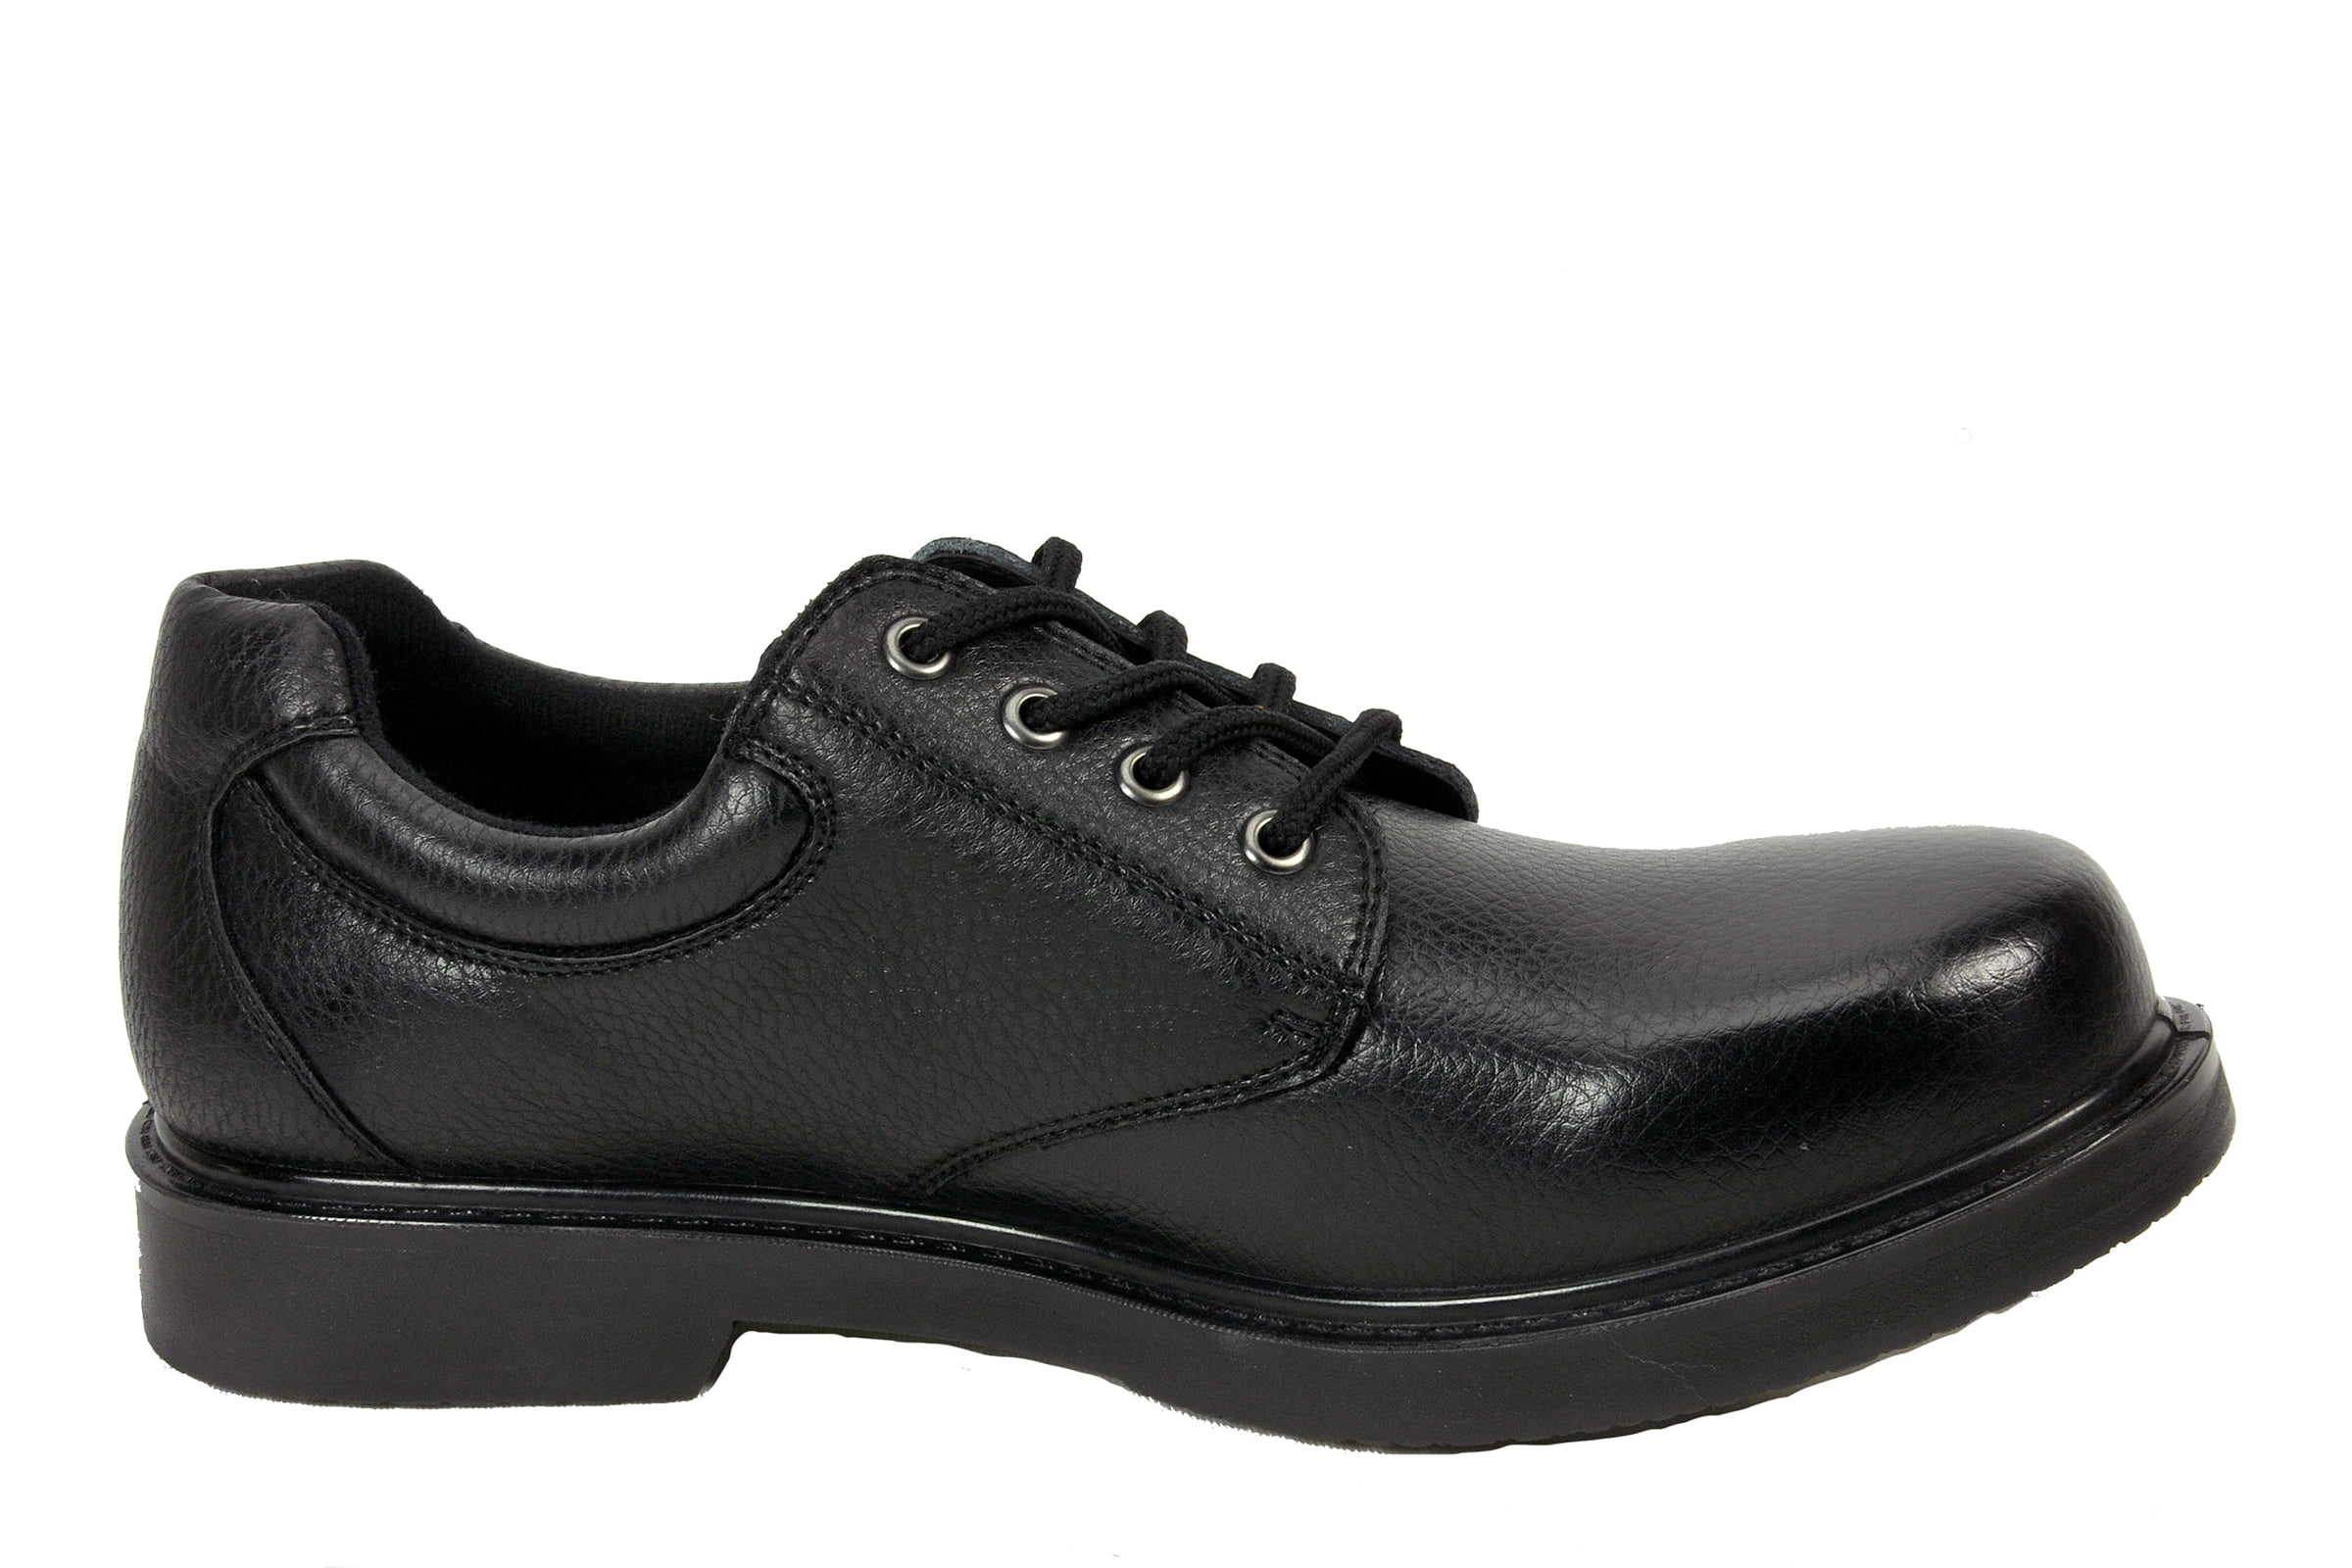 dr scholl's slip resistant work shoes